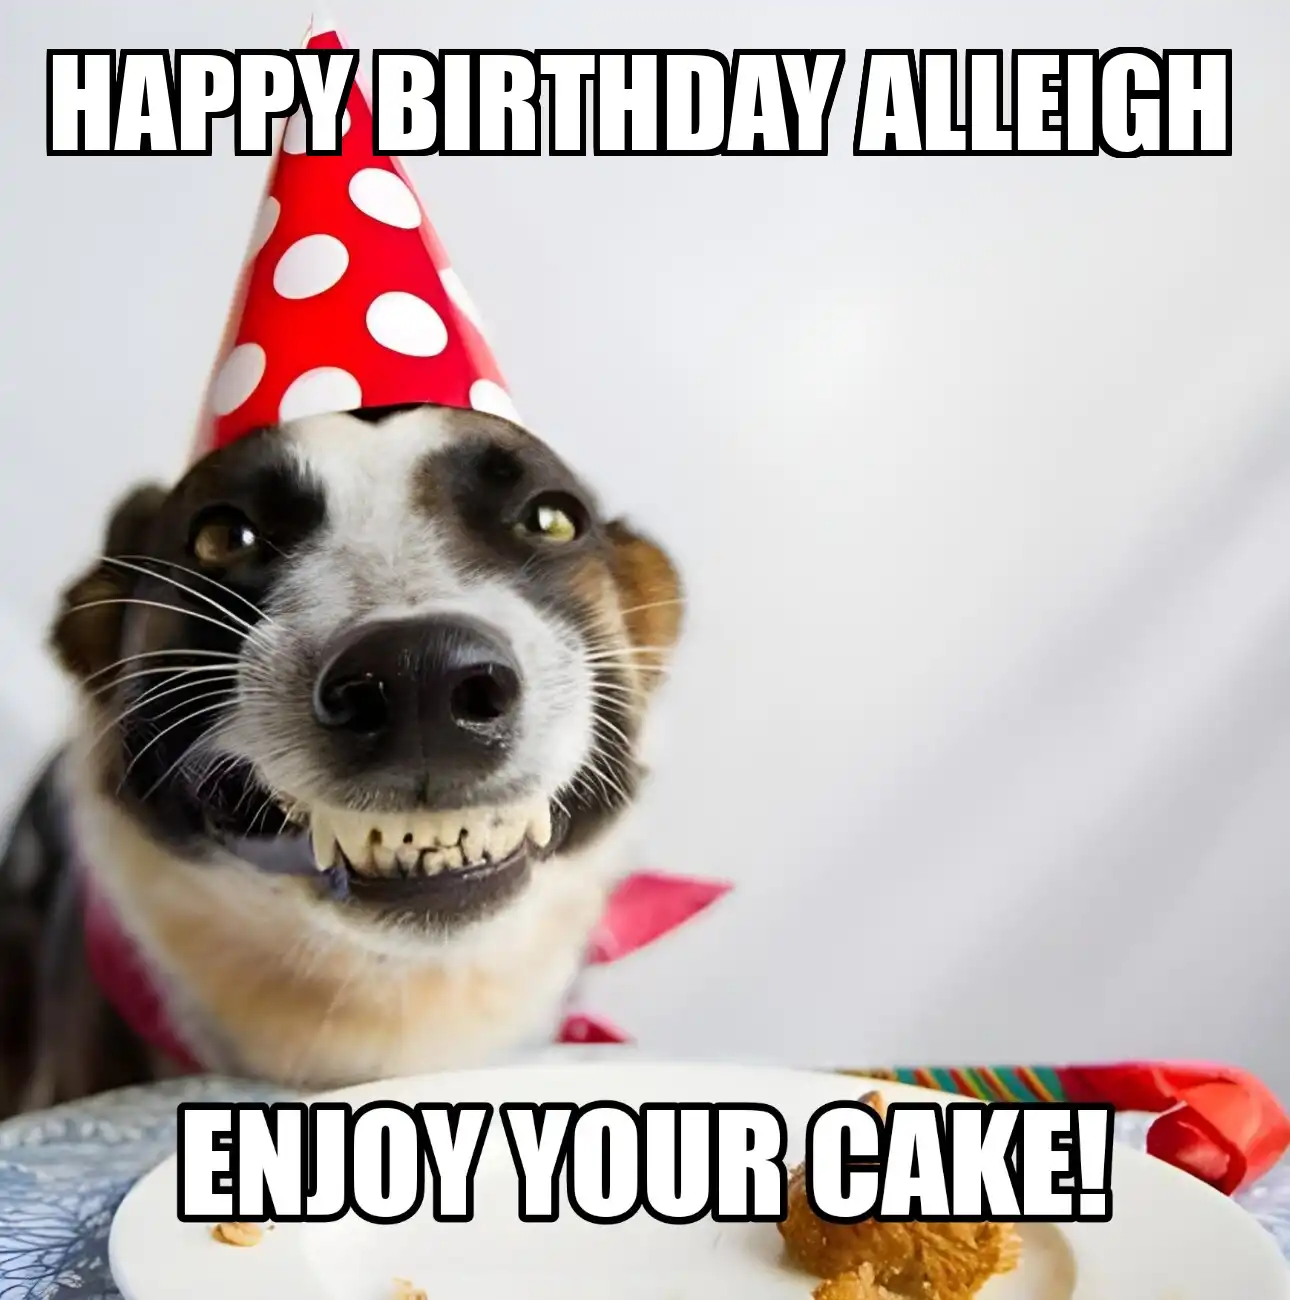 Happy Birthday Alleigh Enjoy Your Cake Dog Meme